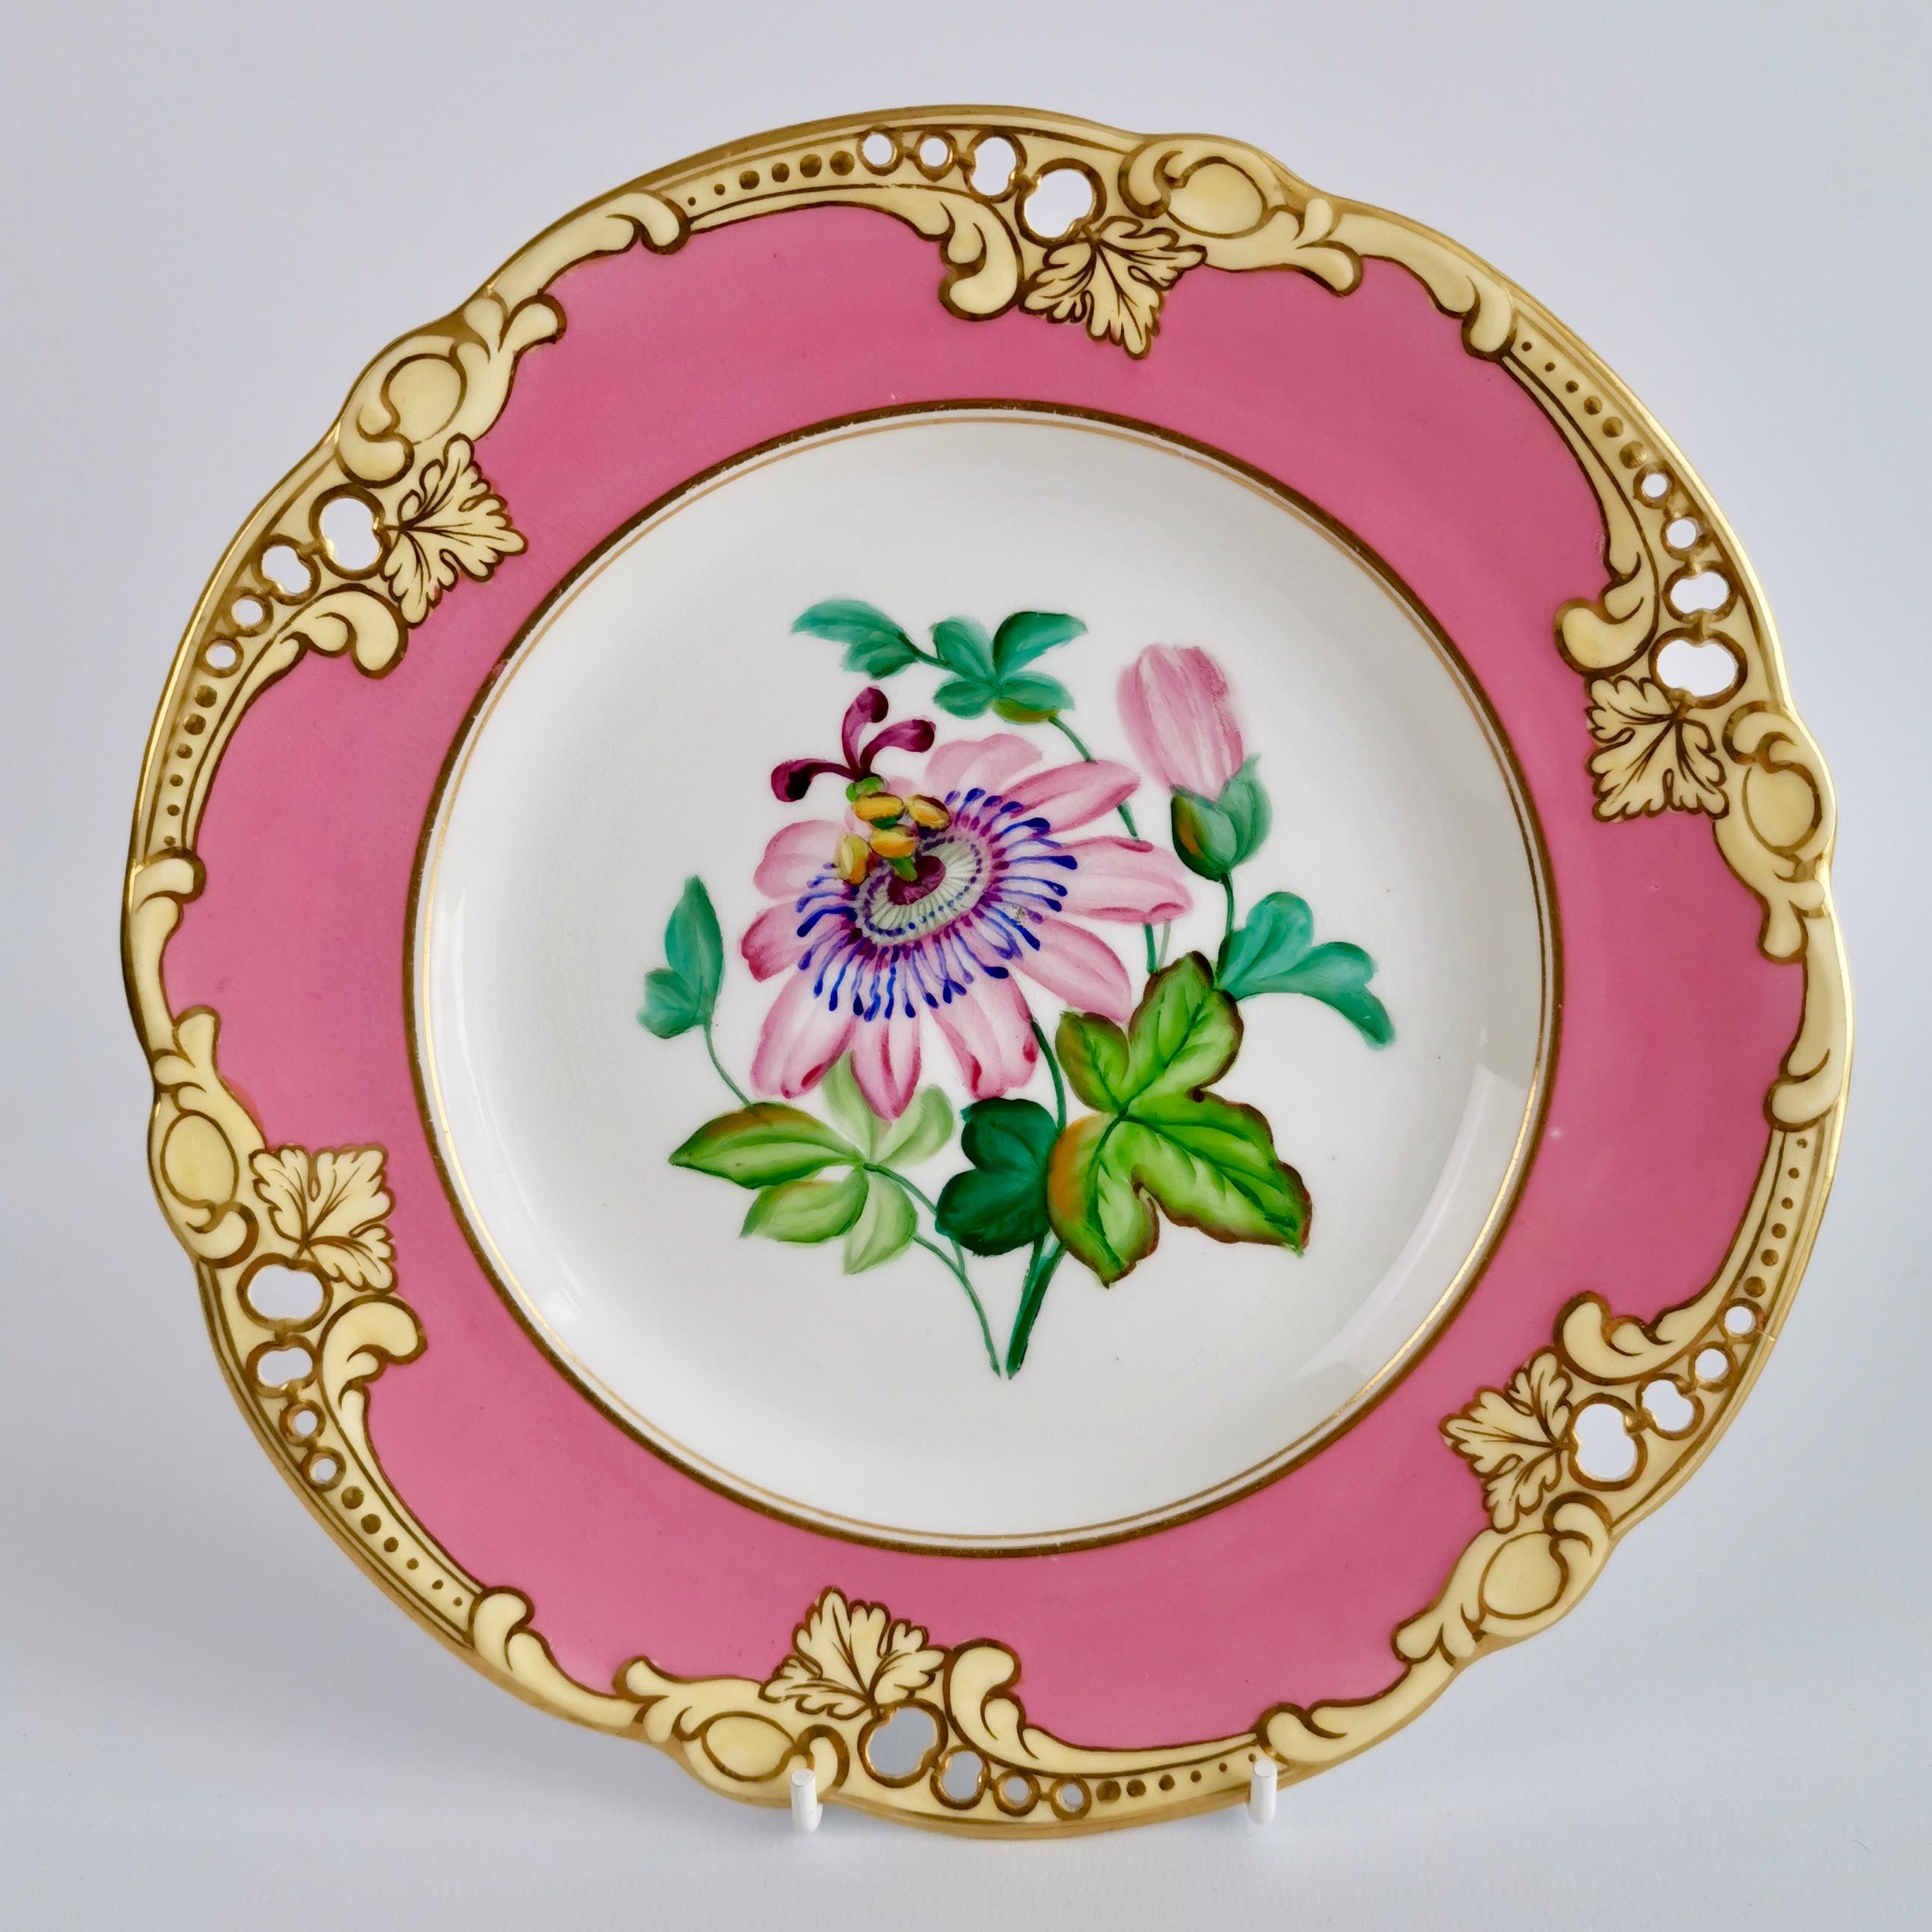 Brown Westhead & Moore Porcelain Dessert Service, Hot Pink Botanical, circa 1860 2